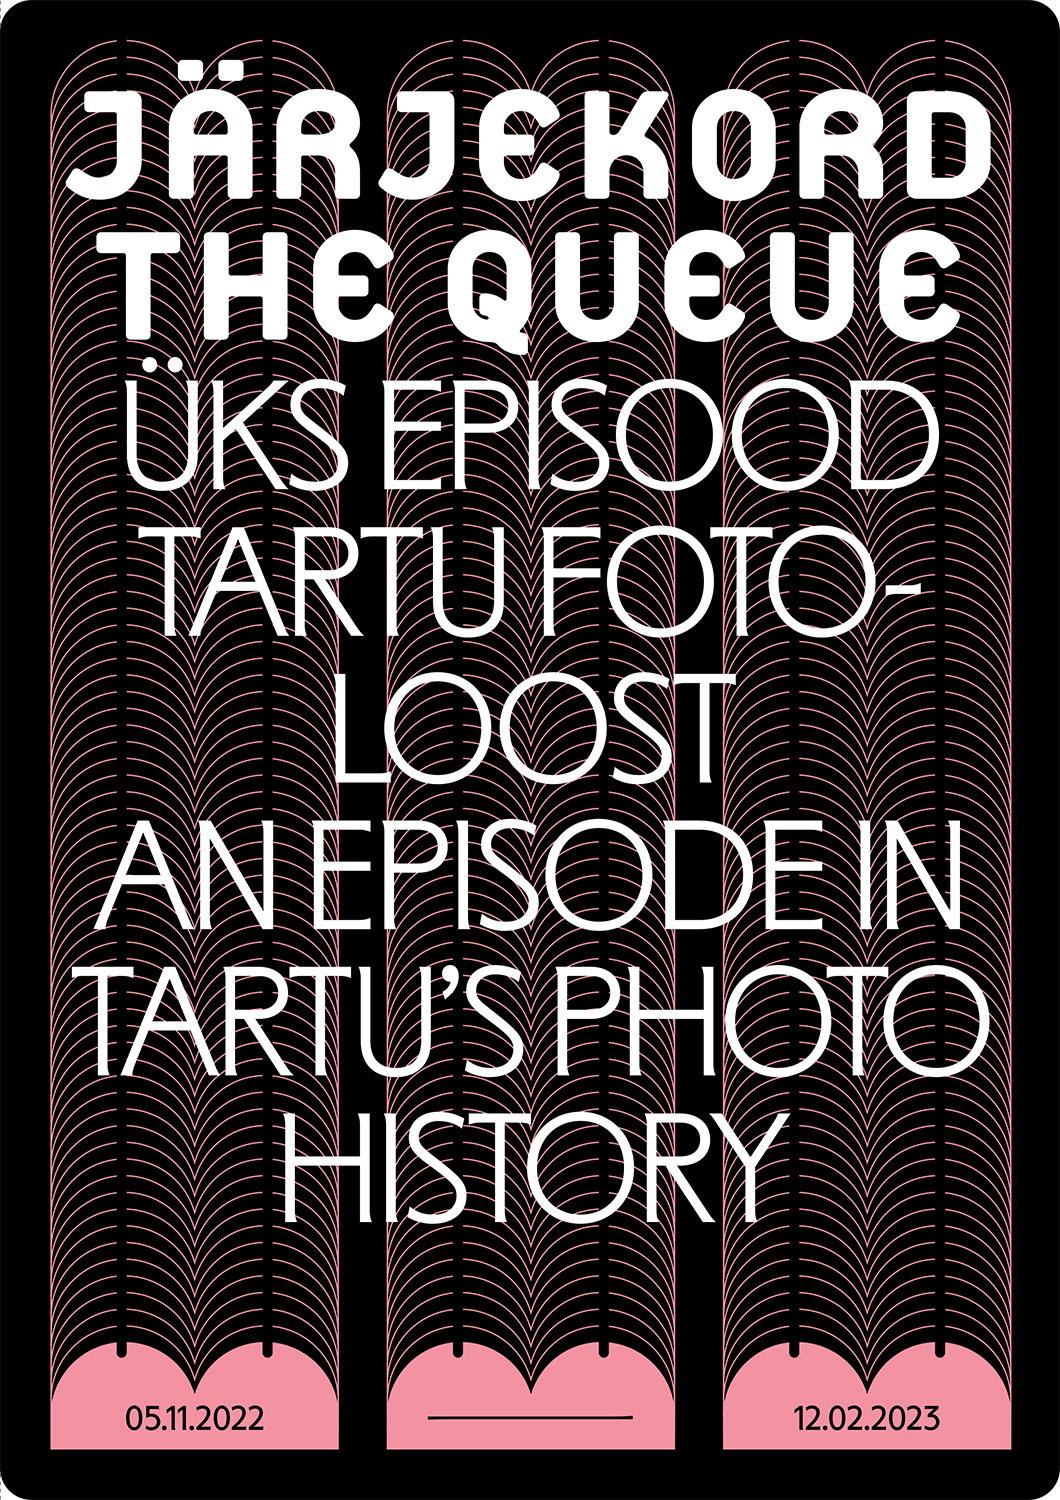 Järjekord. Üks episood Tartu fotoloost /The Queue. An Episode in Tartu’s Photo History